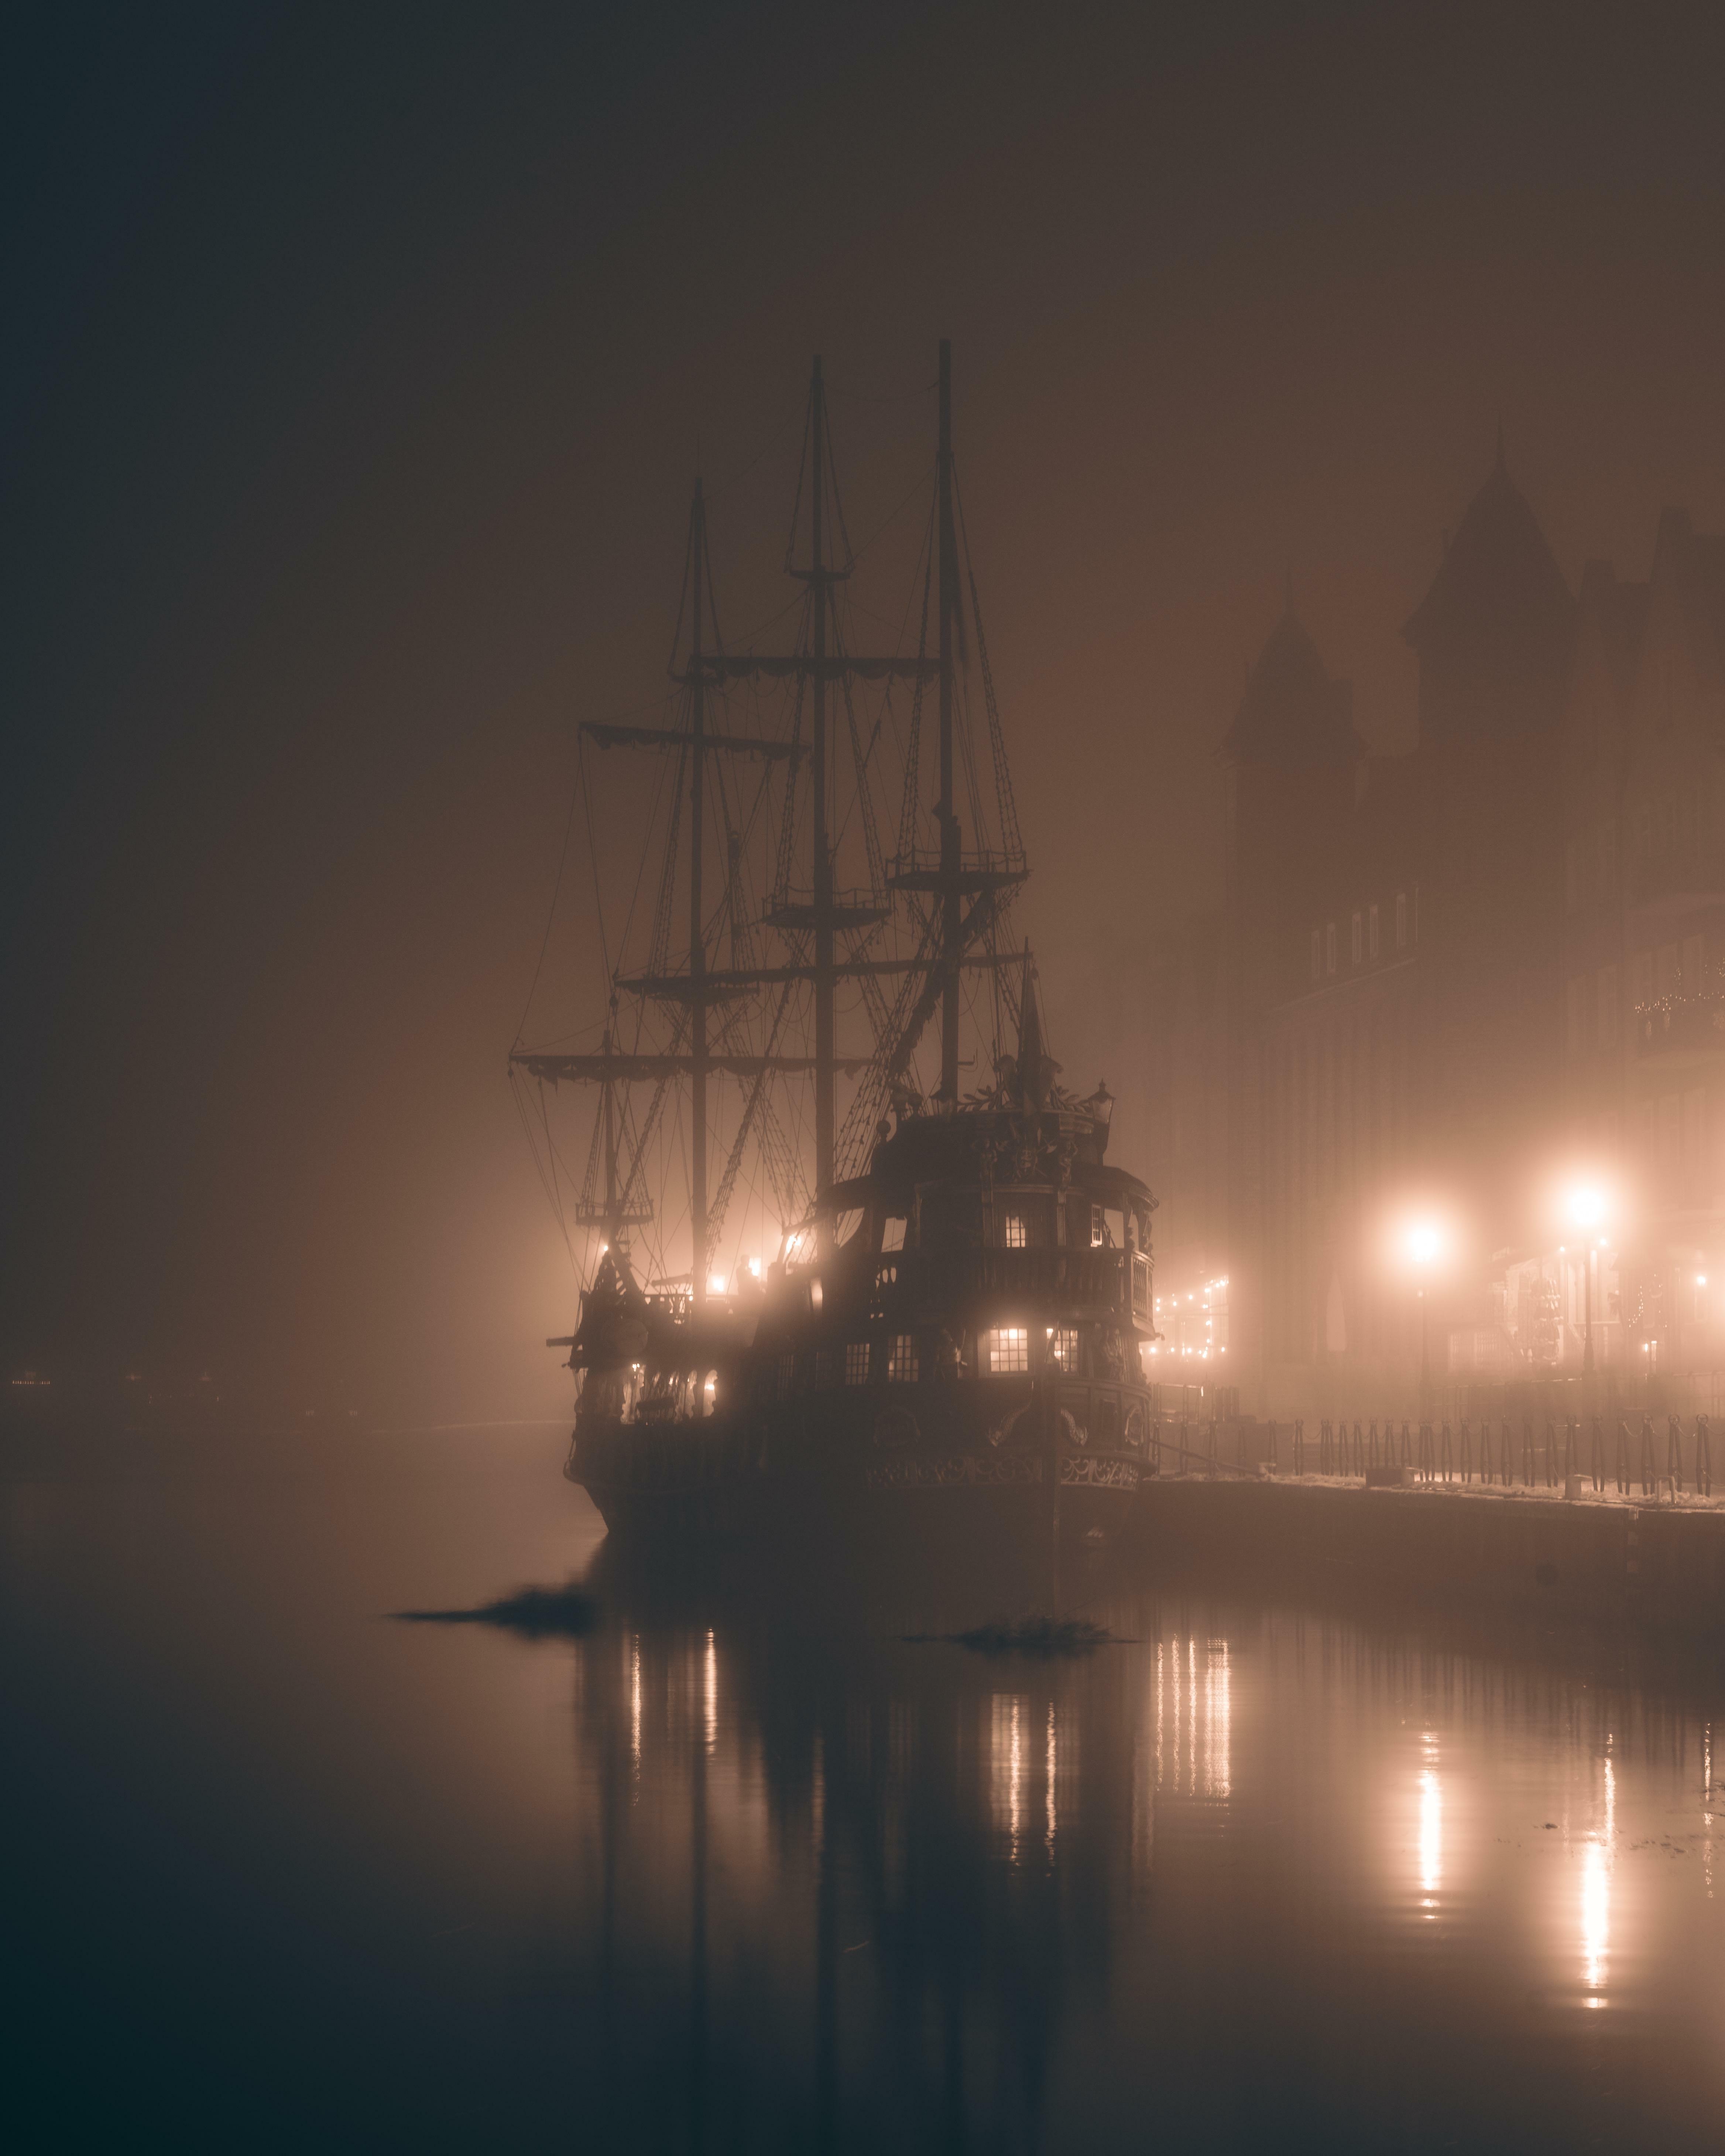 Itap d'un bateau dans le brouillard